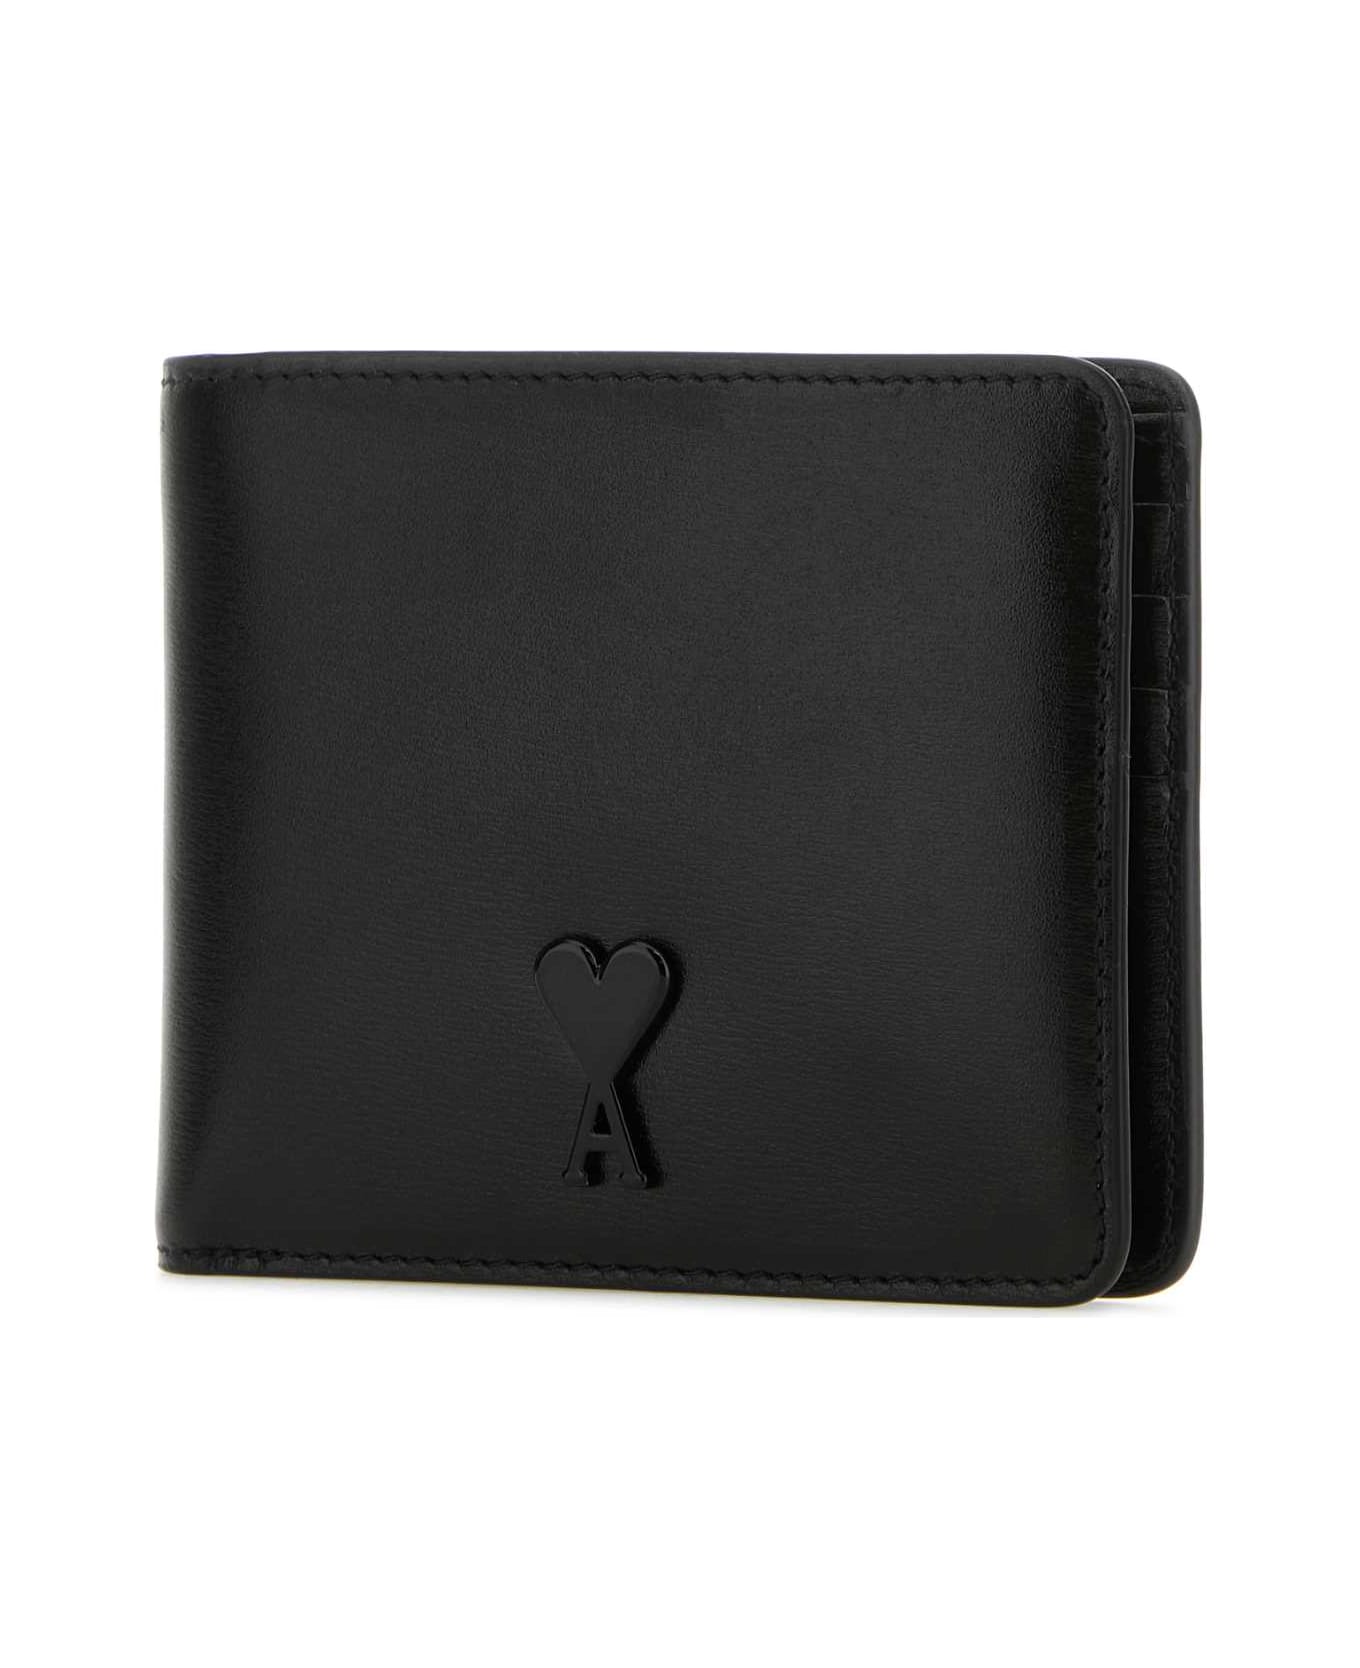 Ami Alexandre Mattiussi Black Leather Wallet - BLACK